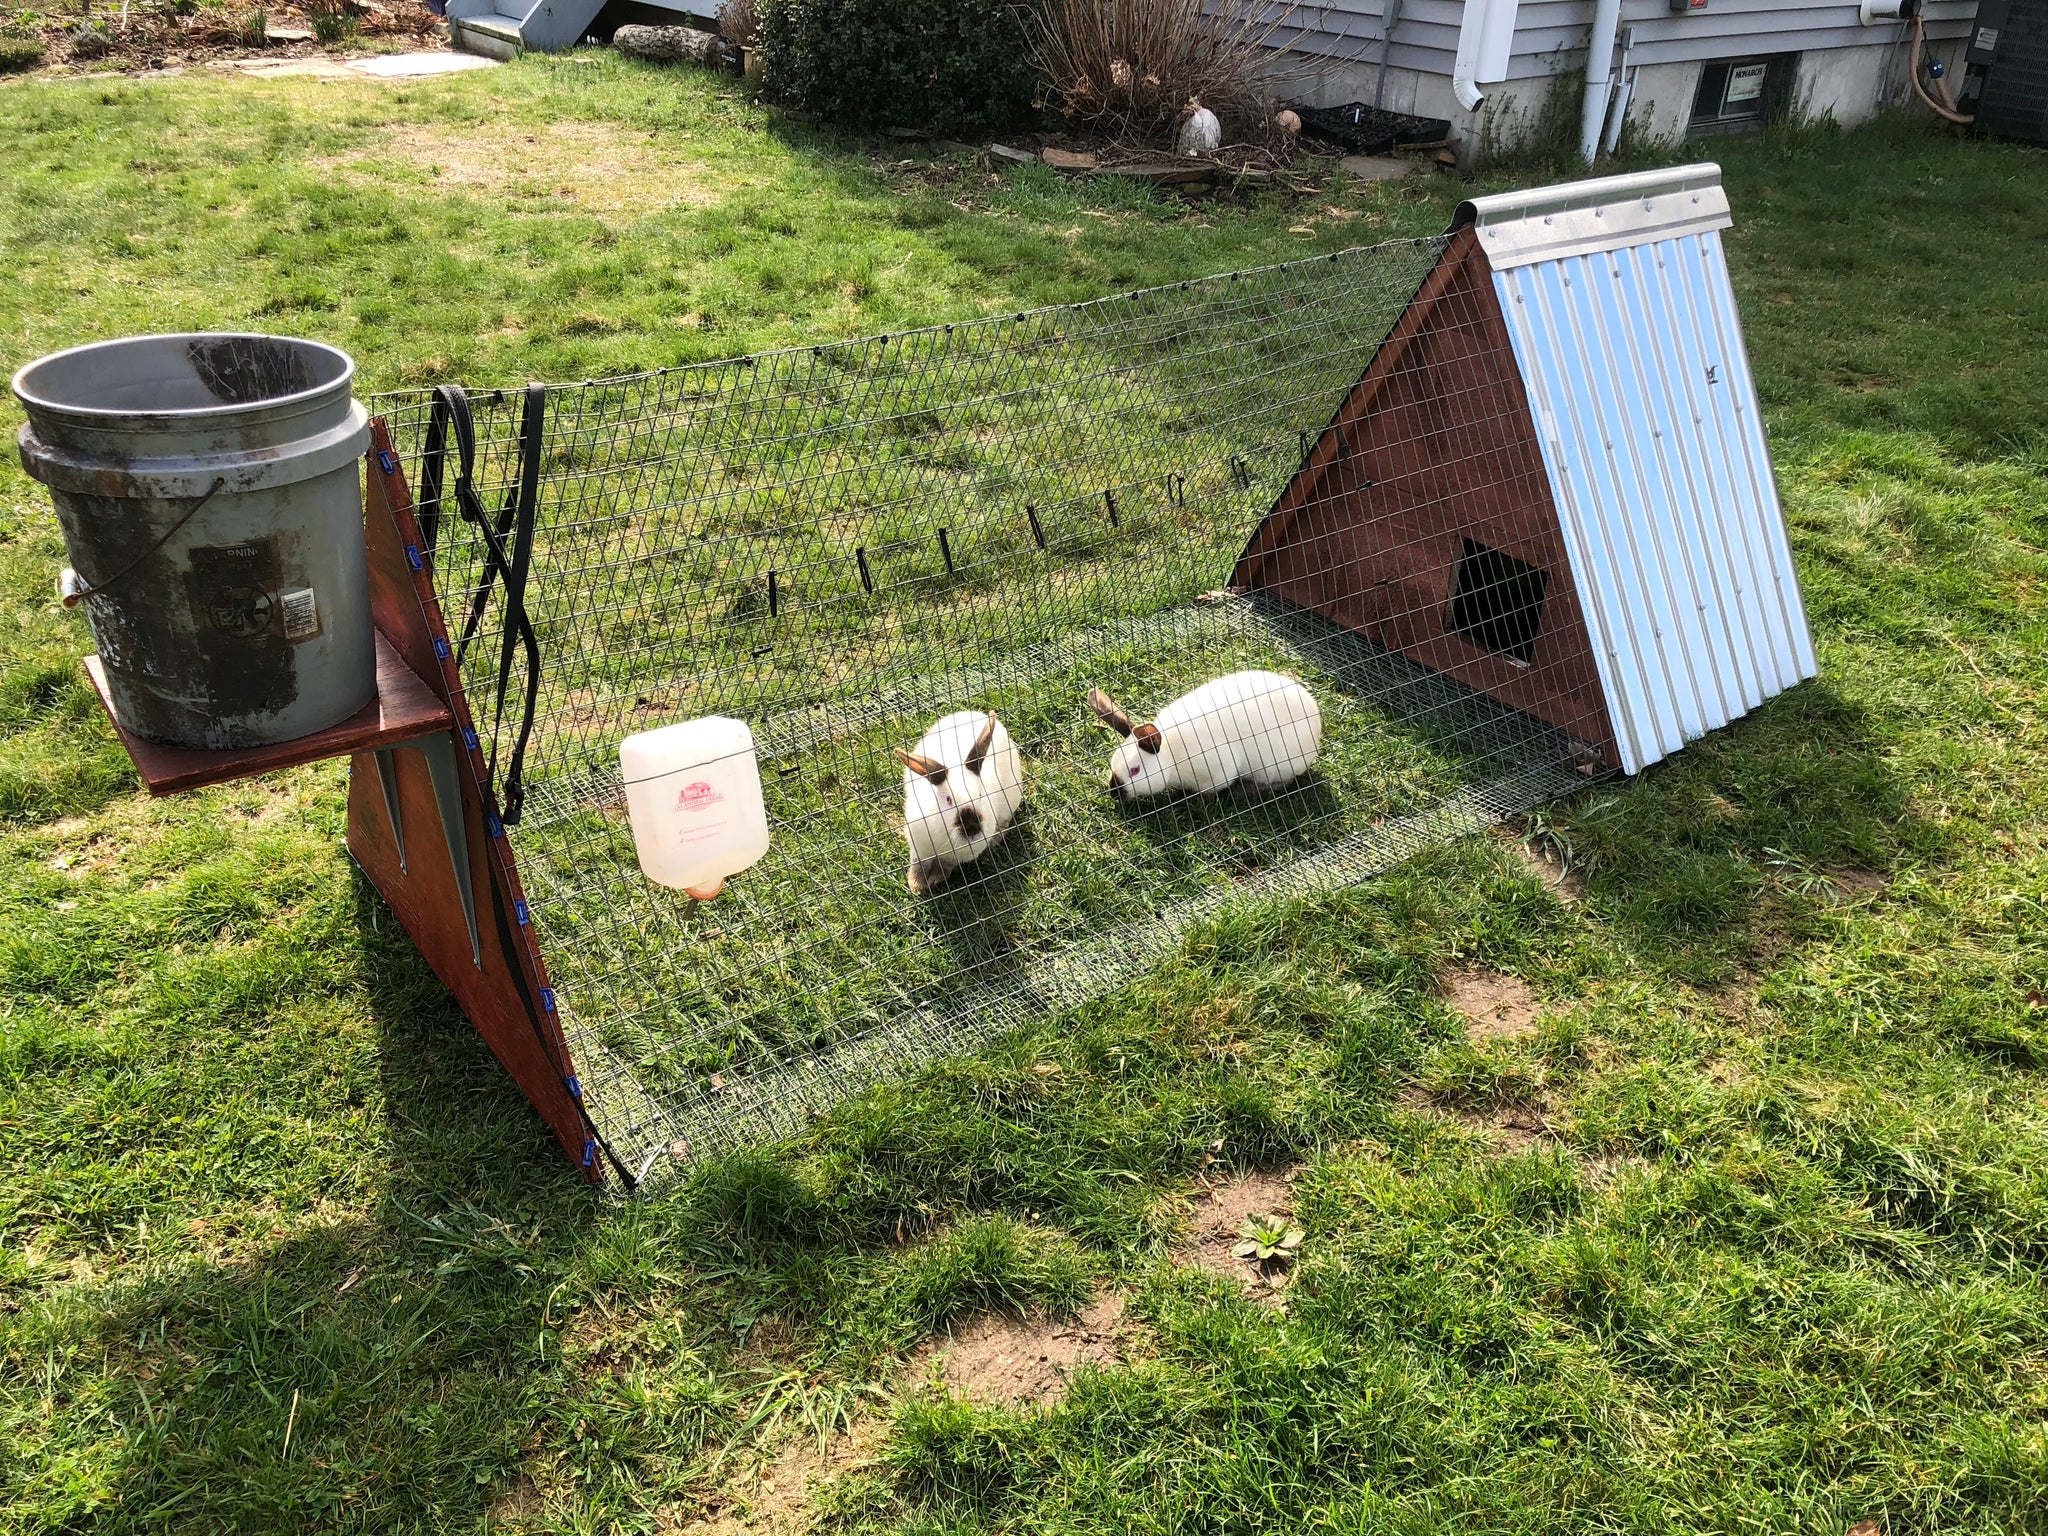 Rabbit Breeders’ Bundle - 3 Hutches & 2 Tractors